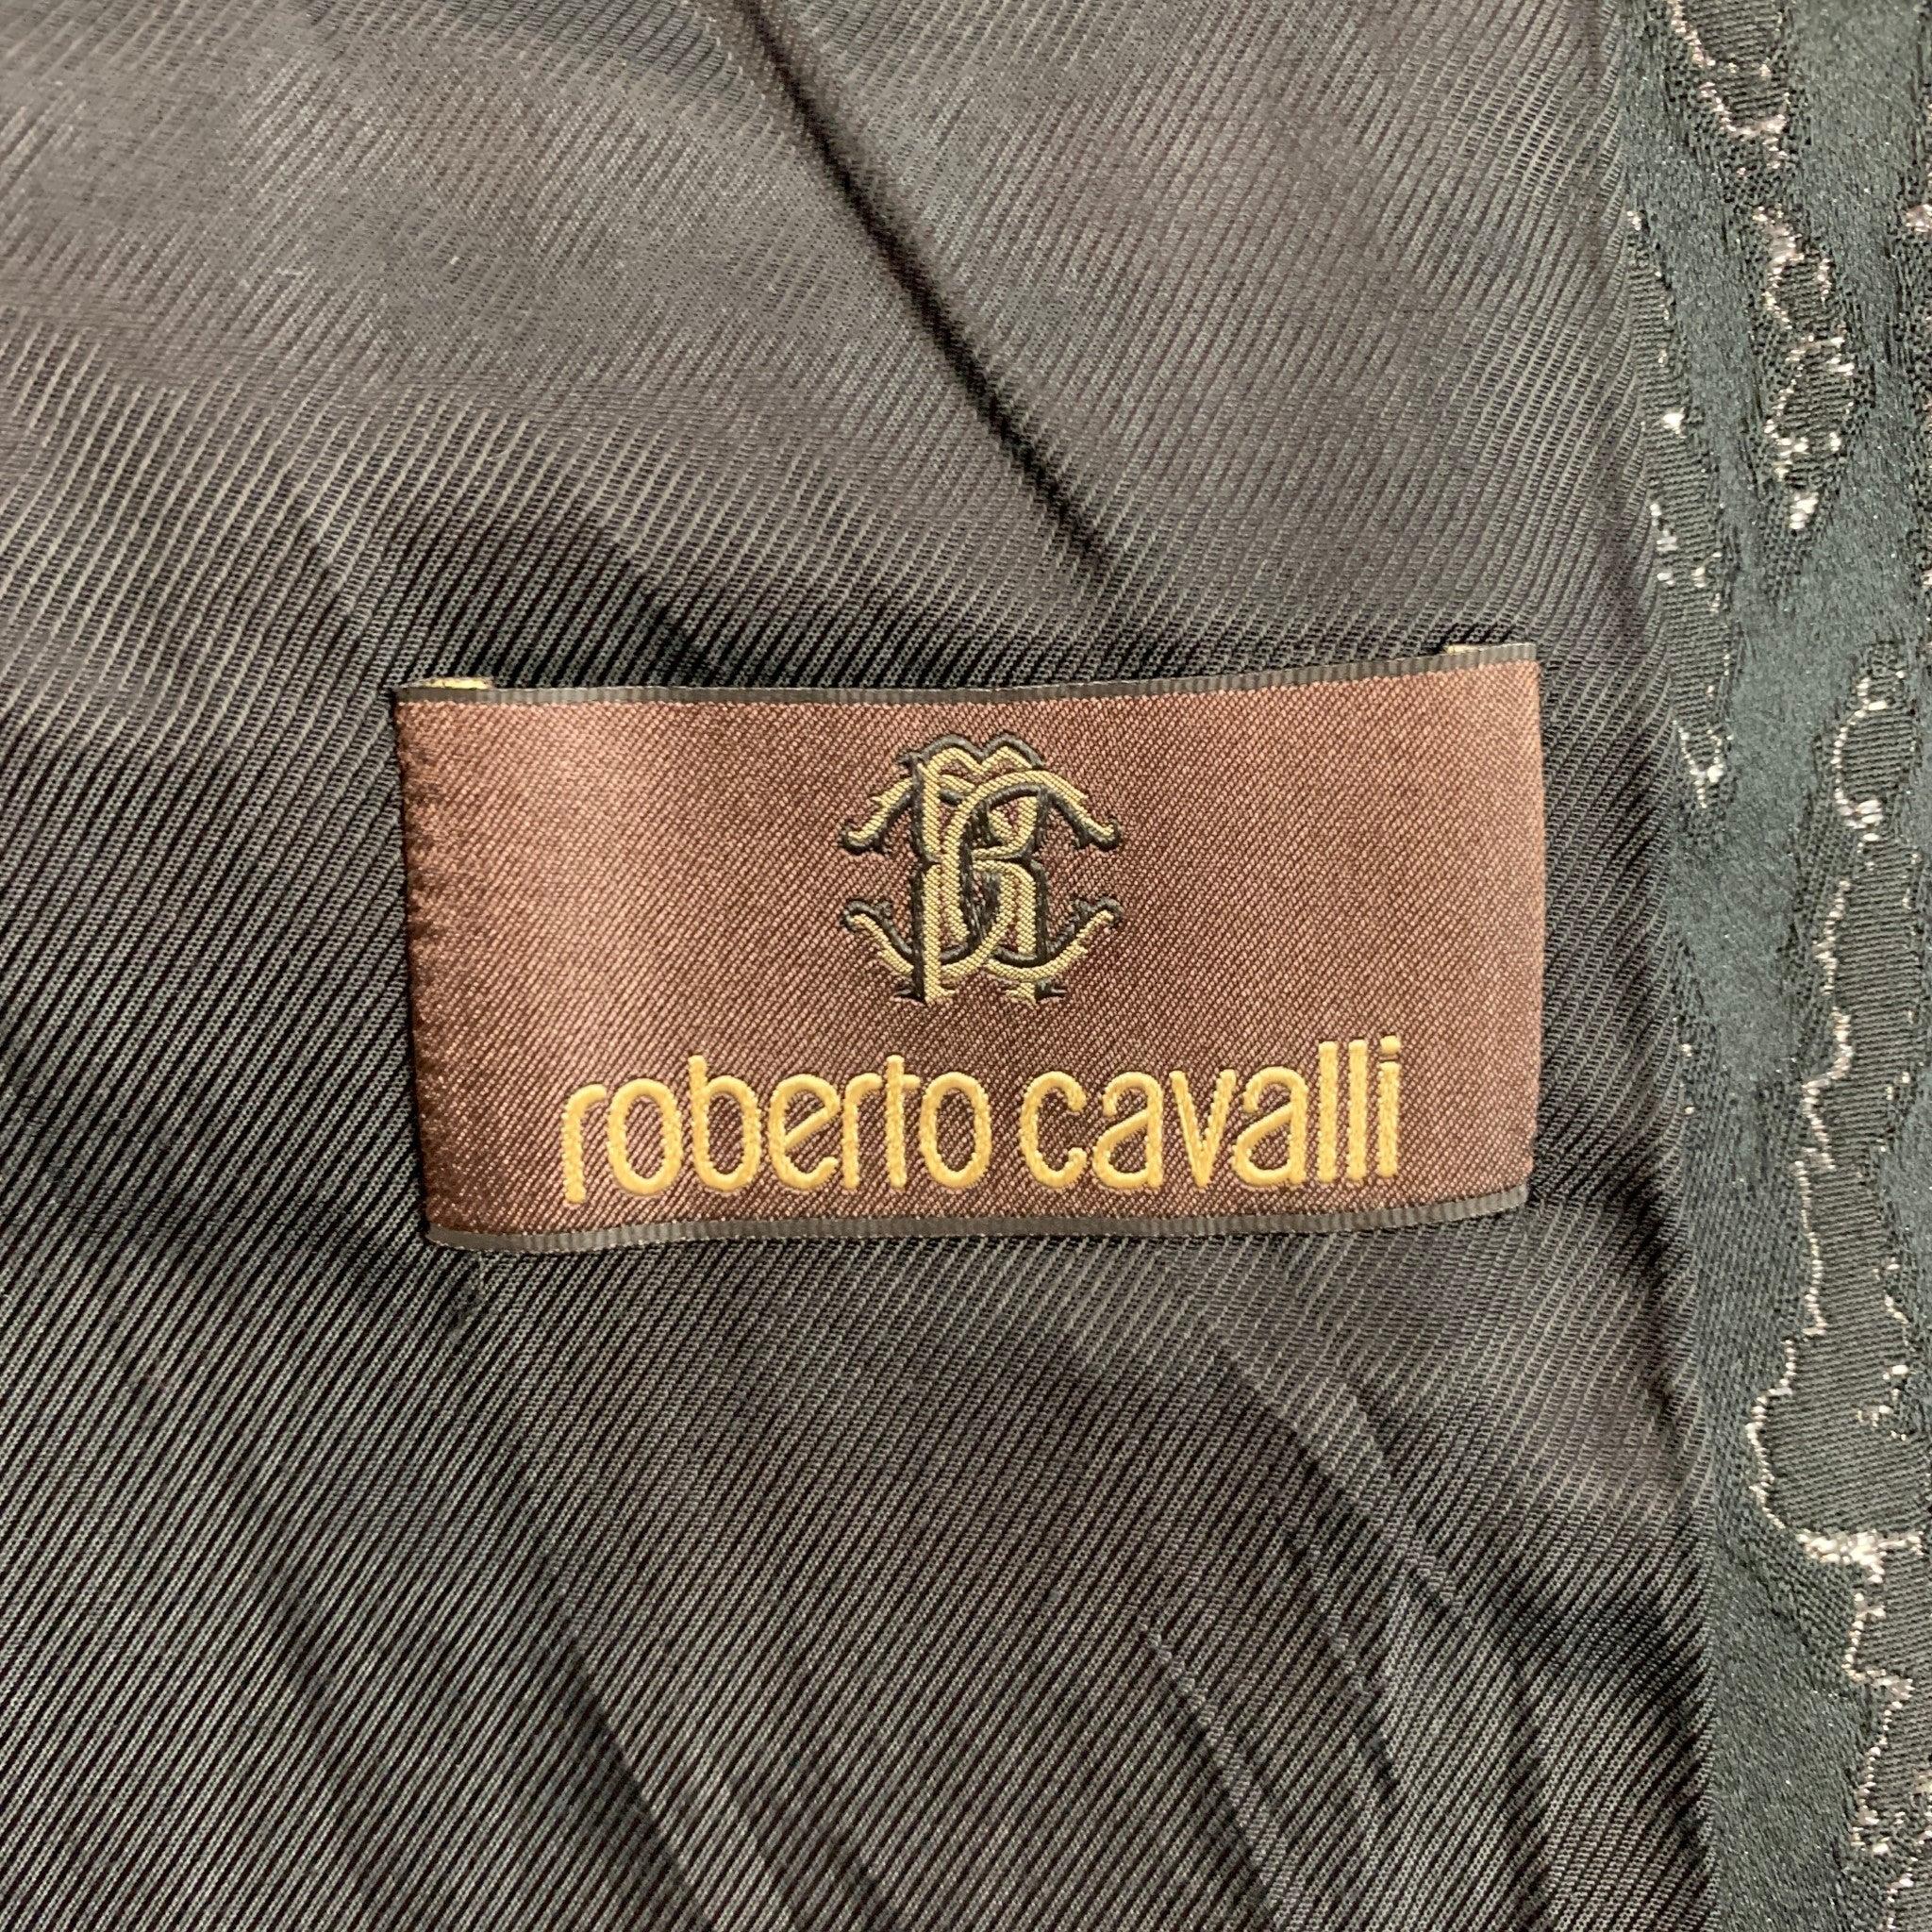 ROBERTO CAVALLI Size 44 Black & Gold Jacquard Wool Blend Sport Coat For Sale 4